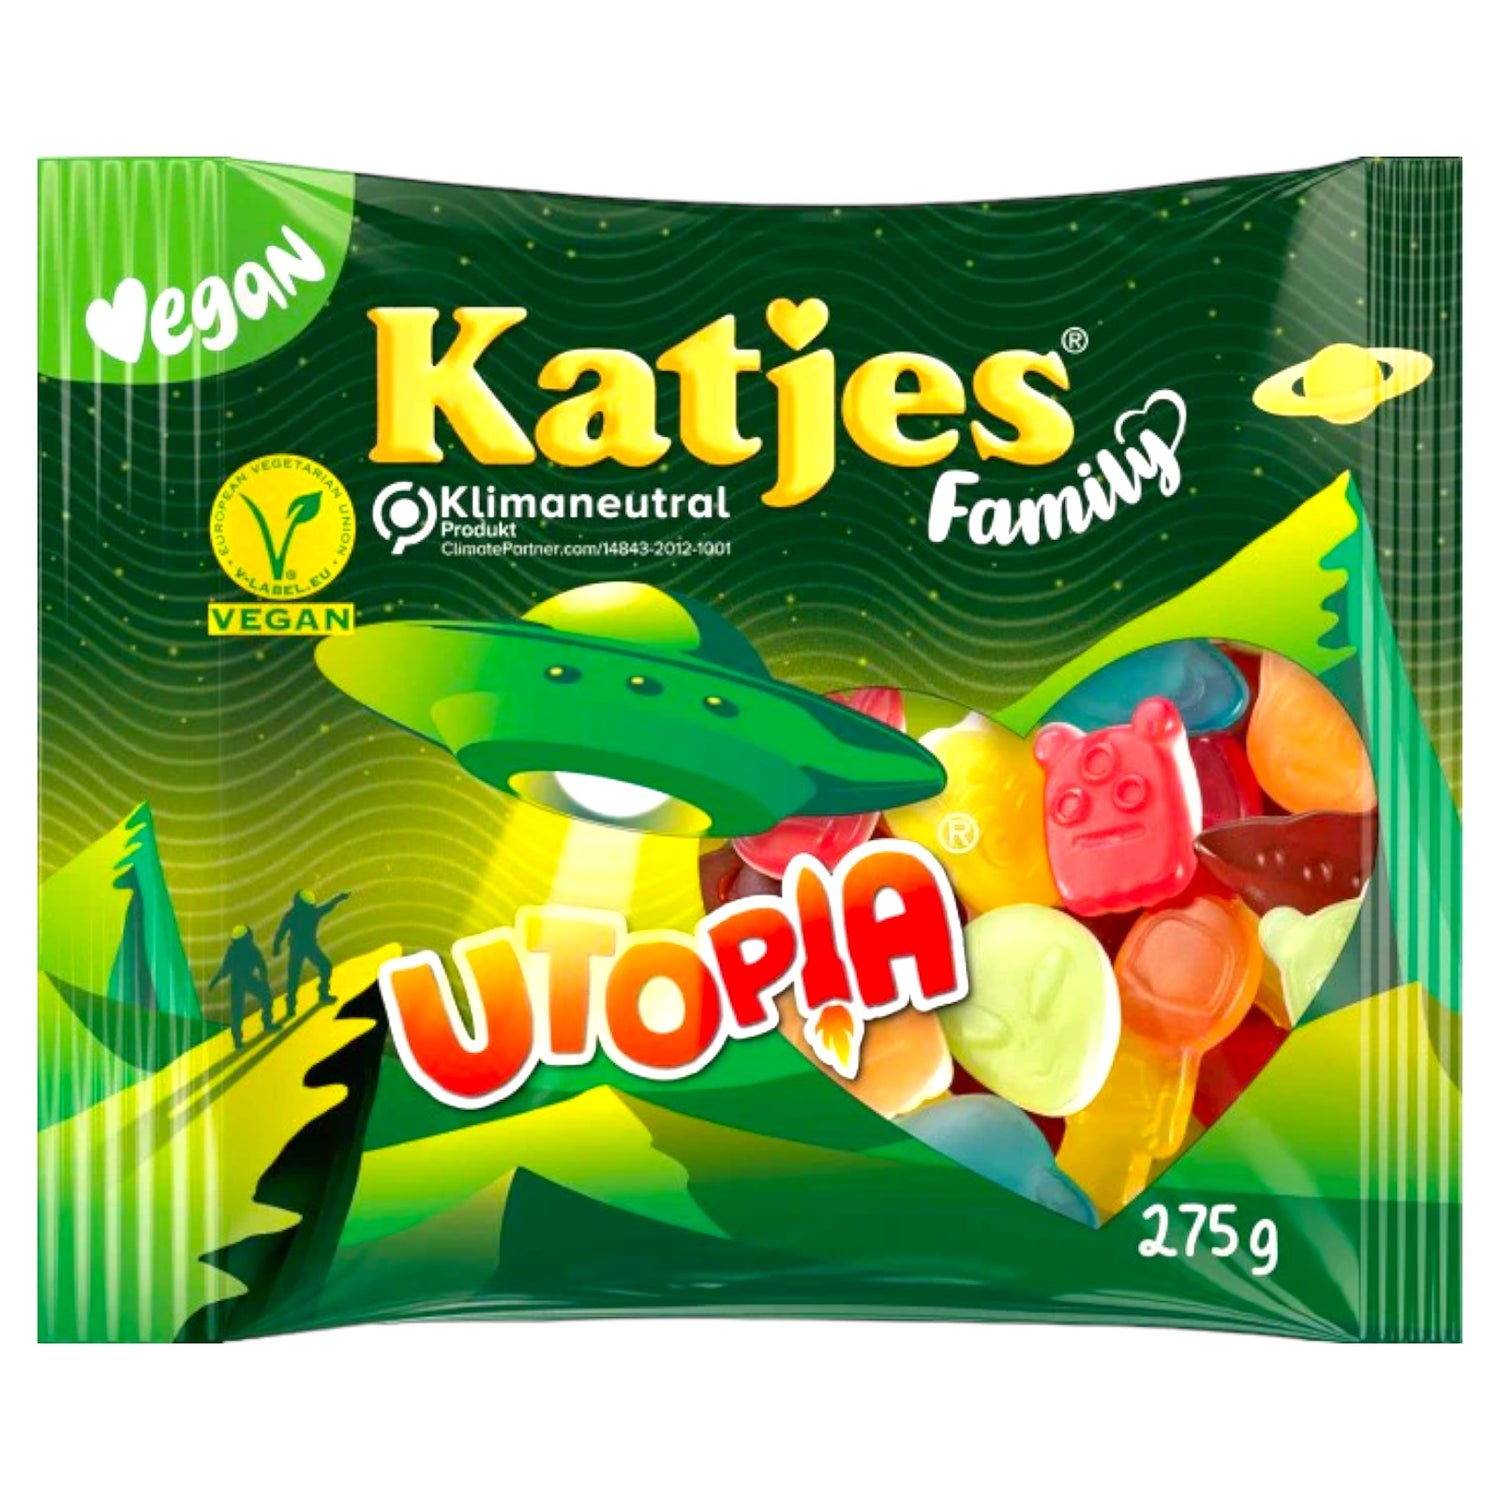 Katjes Utopia Family Bag 275g Vegan (Germany)